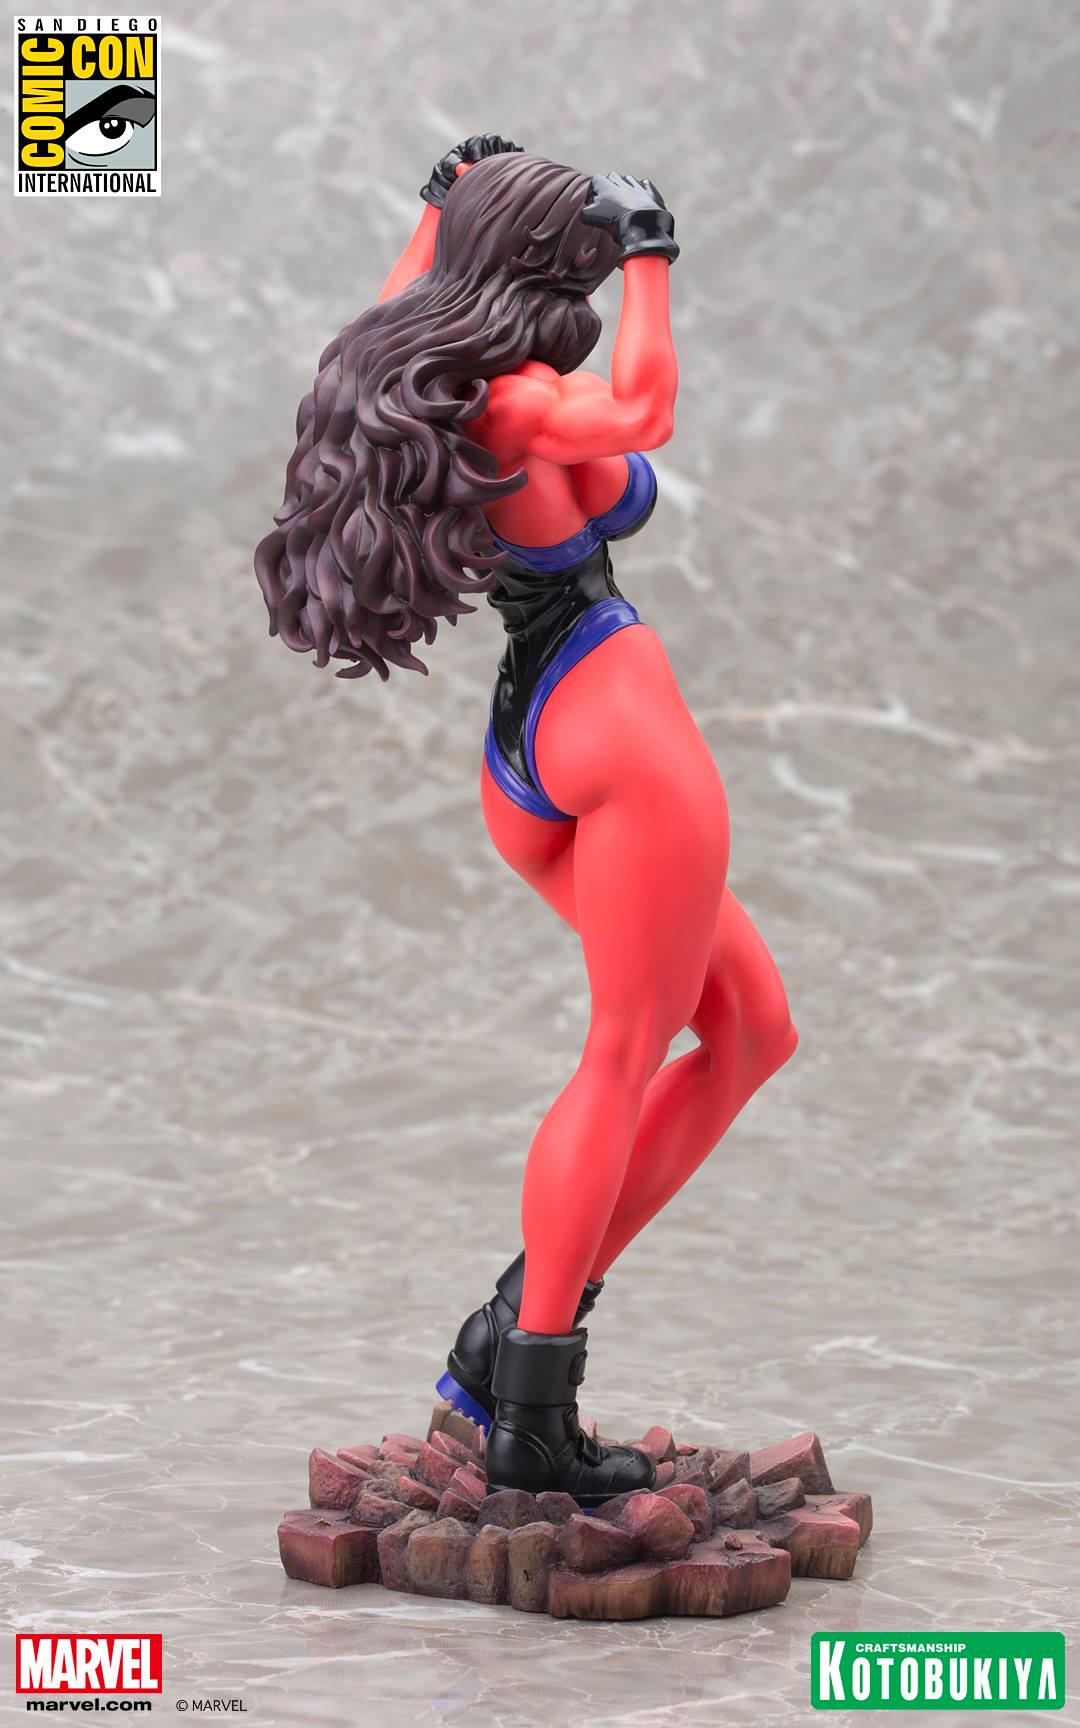 Action Figures: Marvel, DC, etc. - Página 4 Red-she-hulk-bishoujo-statue-2015-sdcc-exclusive-marvel-kotobukiya-7